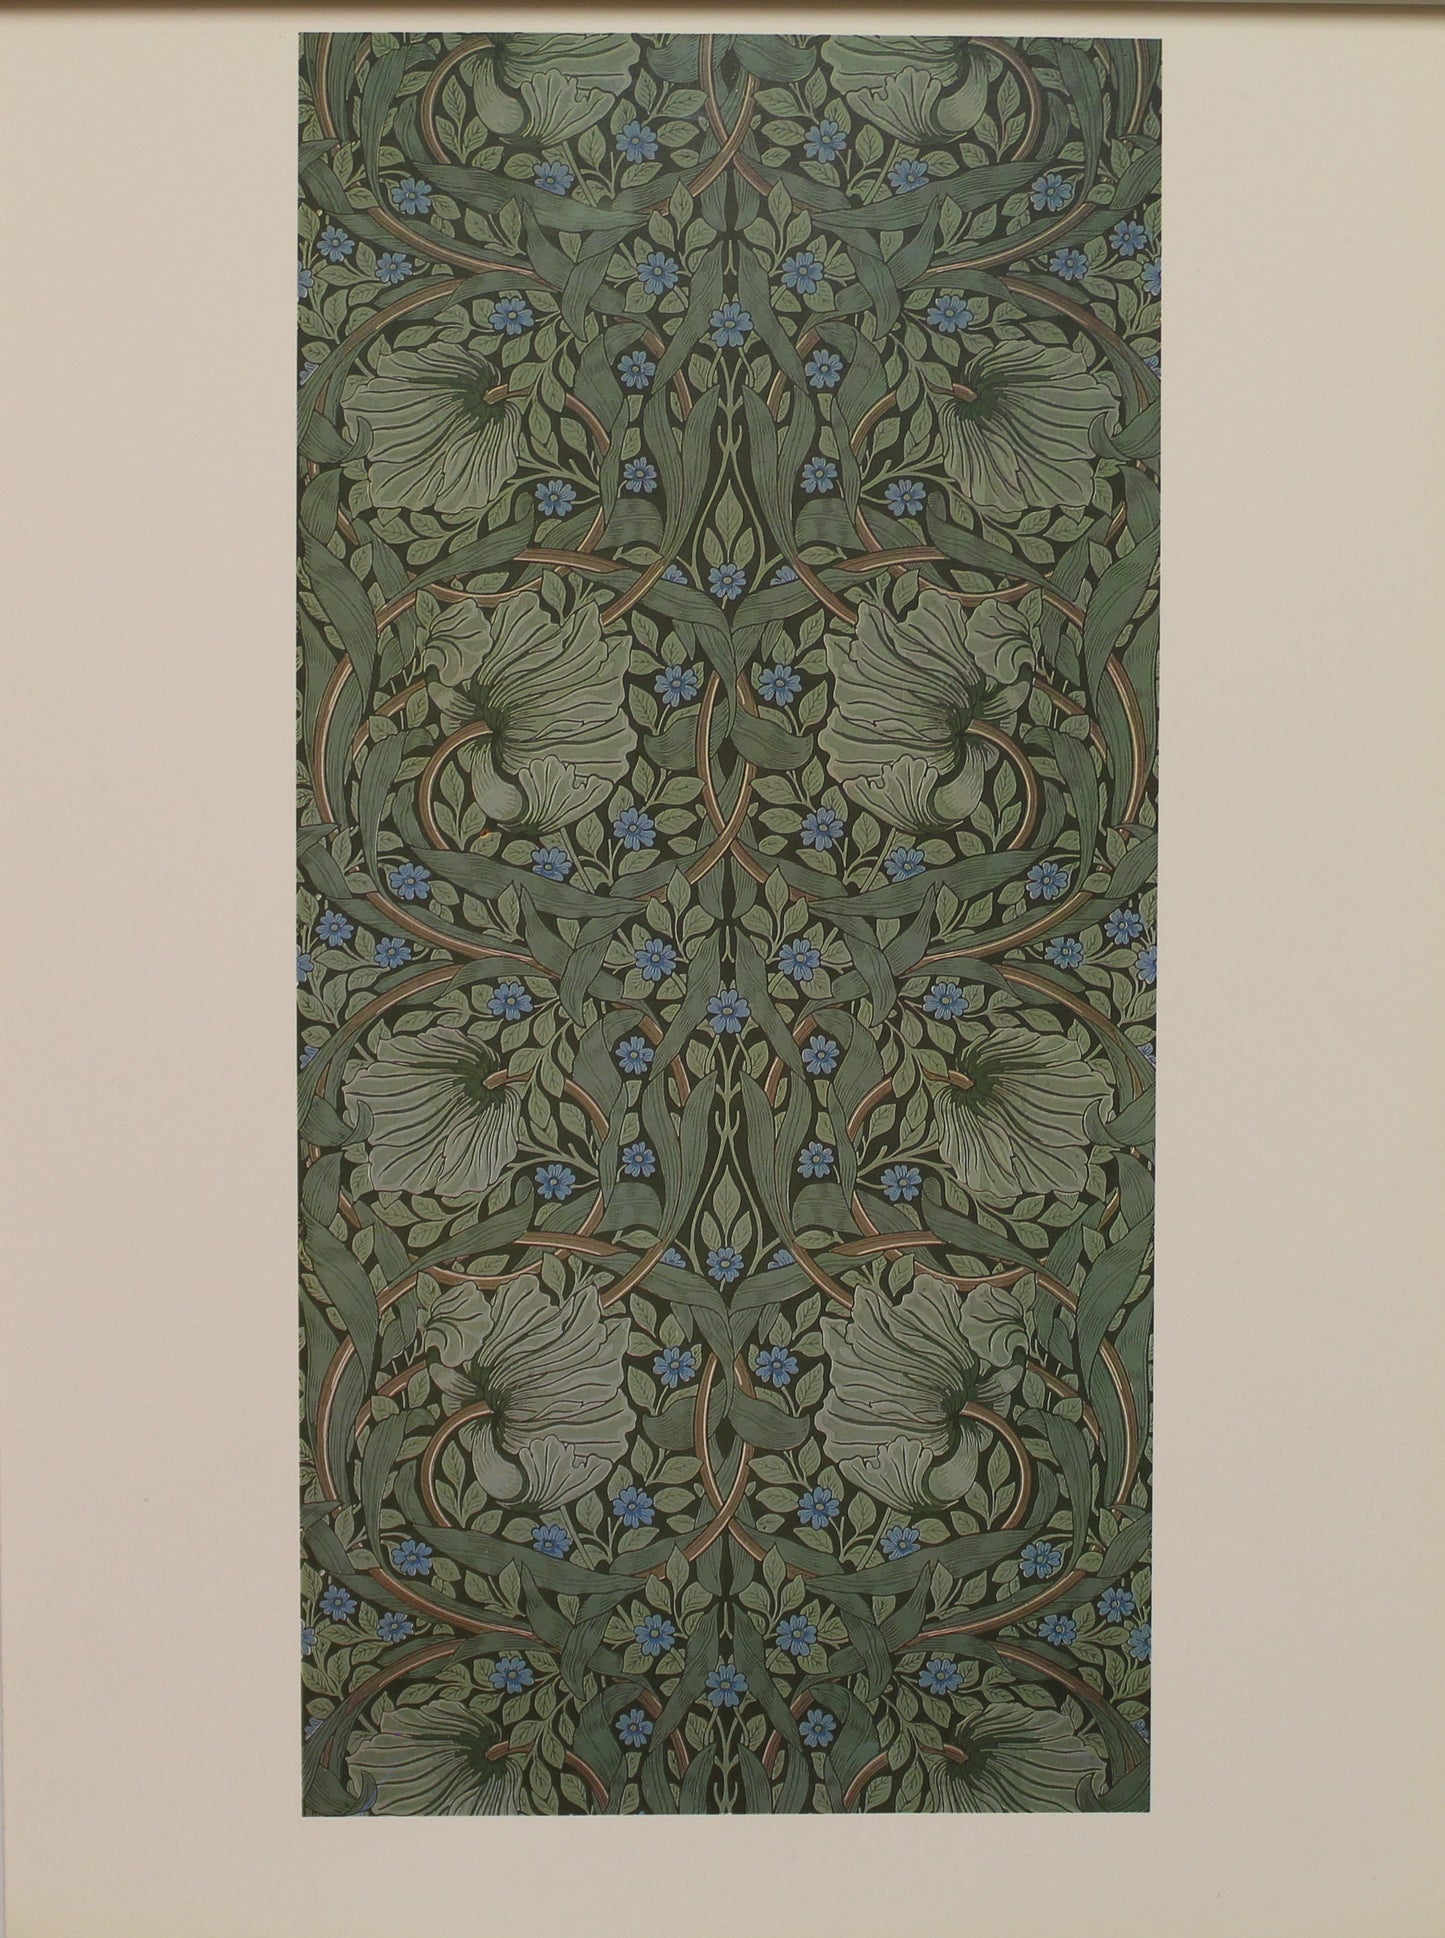 Decorator, Morris William, Wallpaper Design, Pimpernel, Plate 4, Art Nouveau, c1876